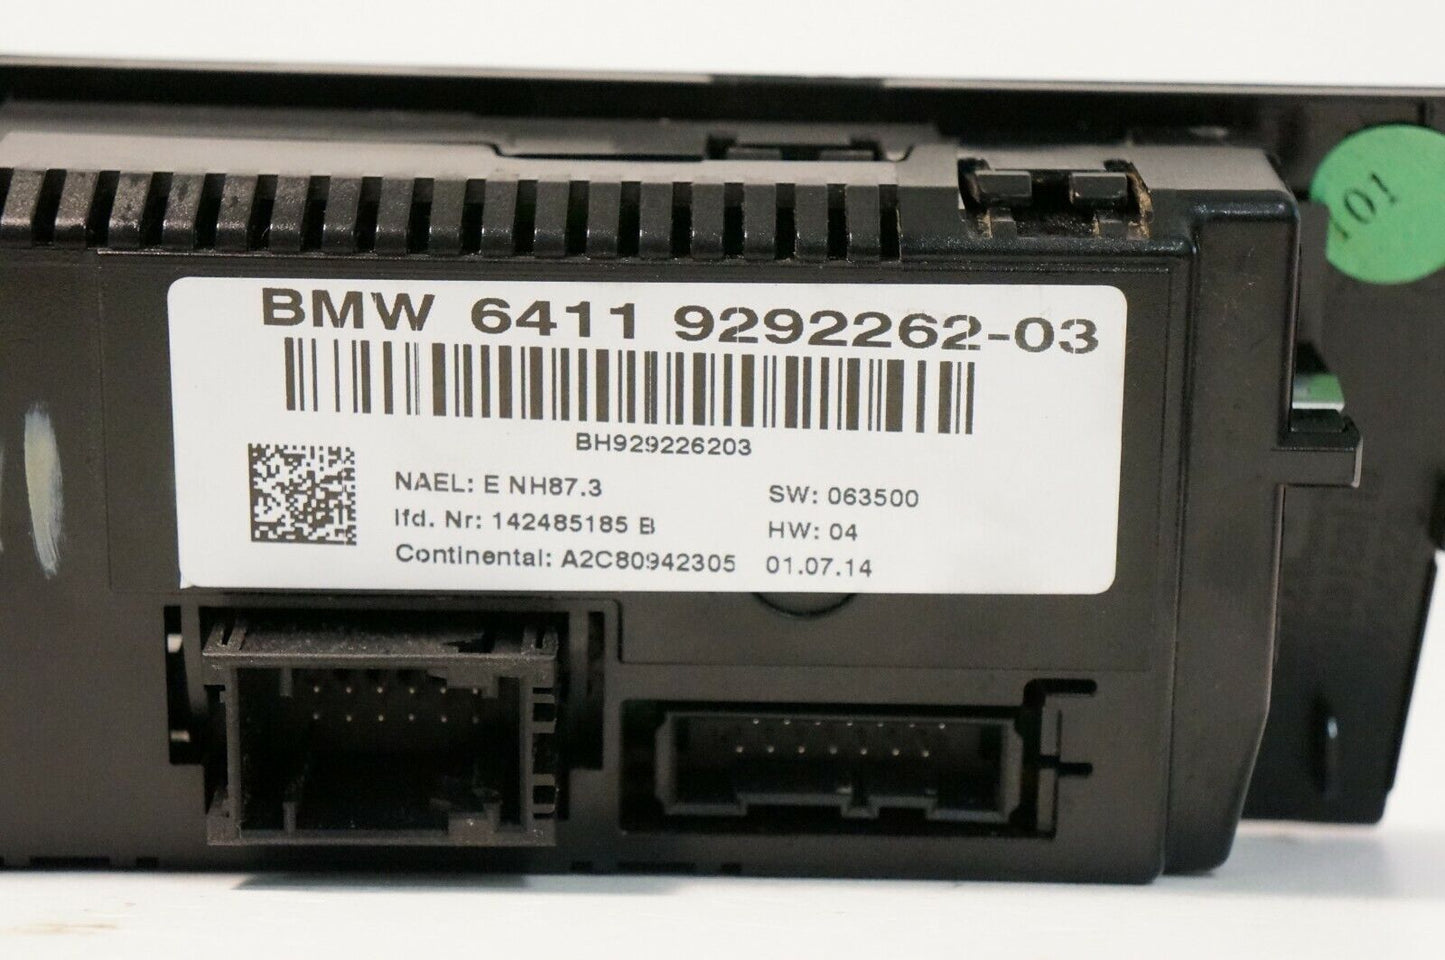 2015 BMW X1 AC Heater Temperature Climate Control 6411 9292262-03 OEM